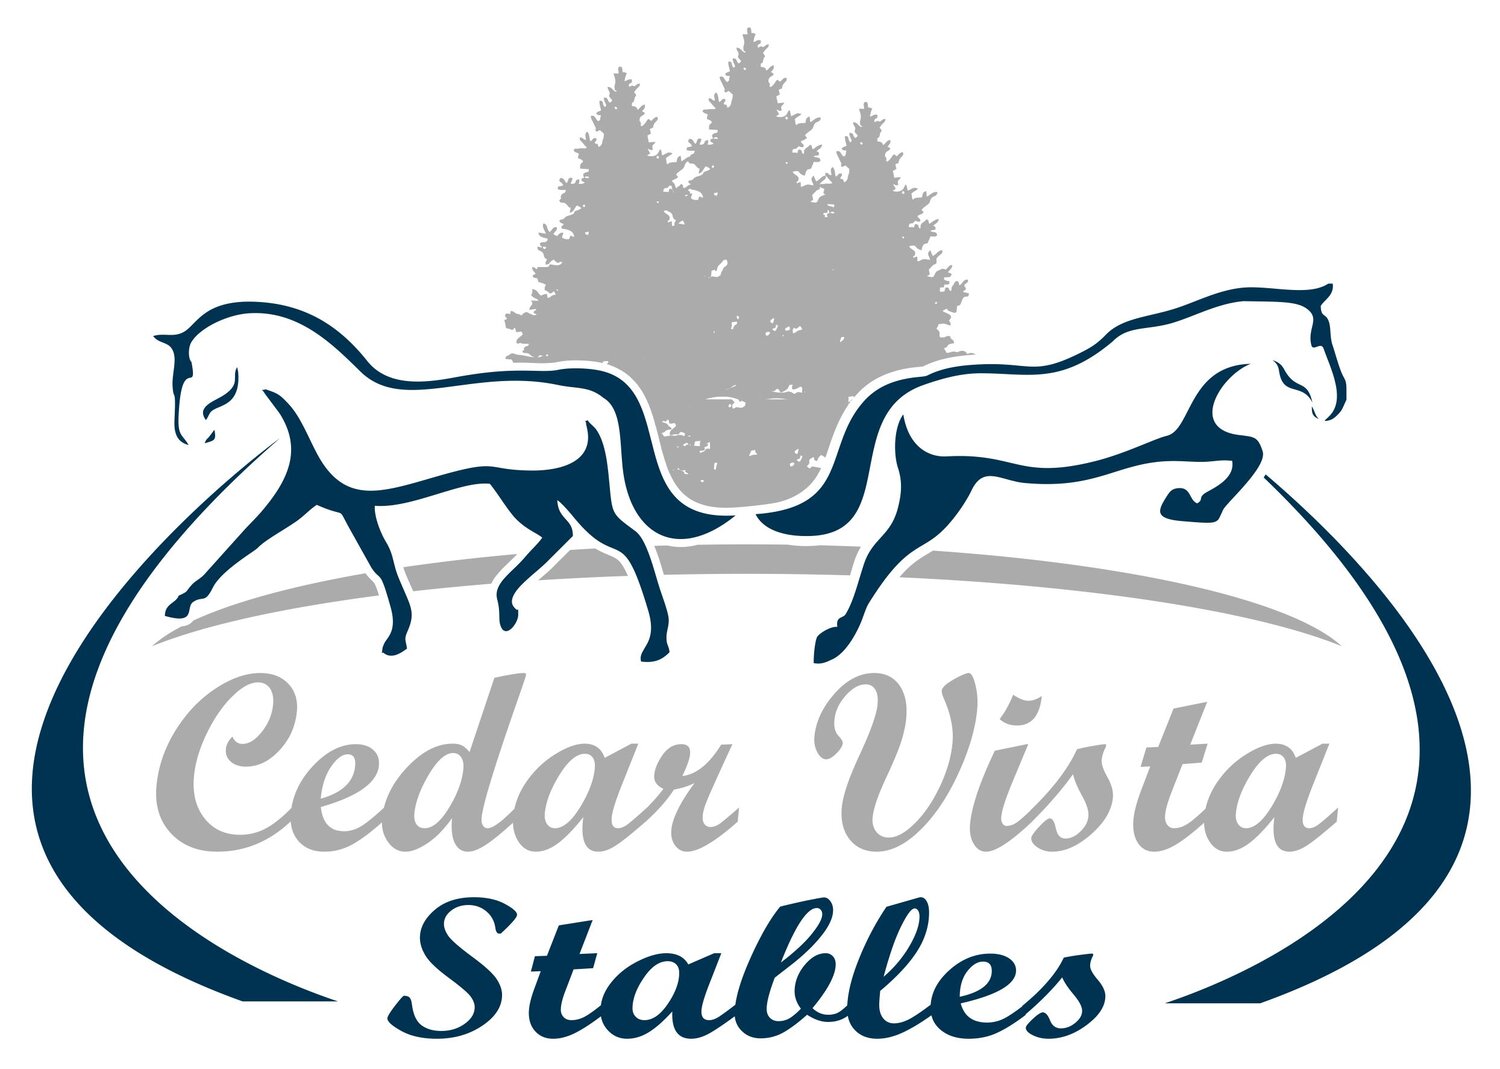 Cedar Vista Stables